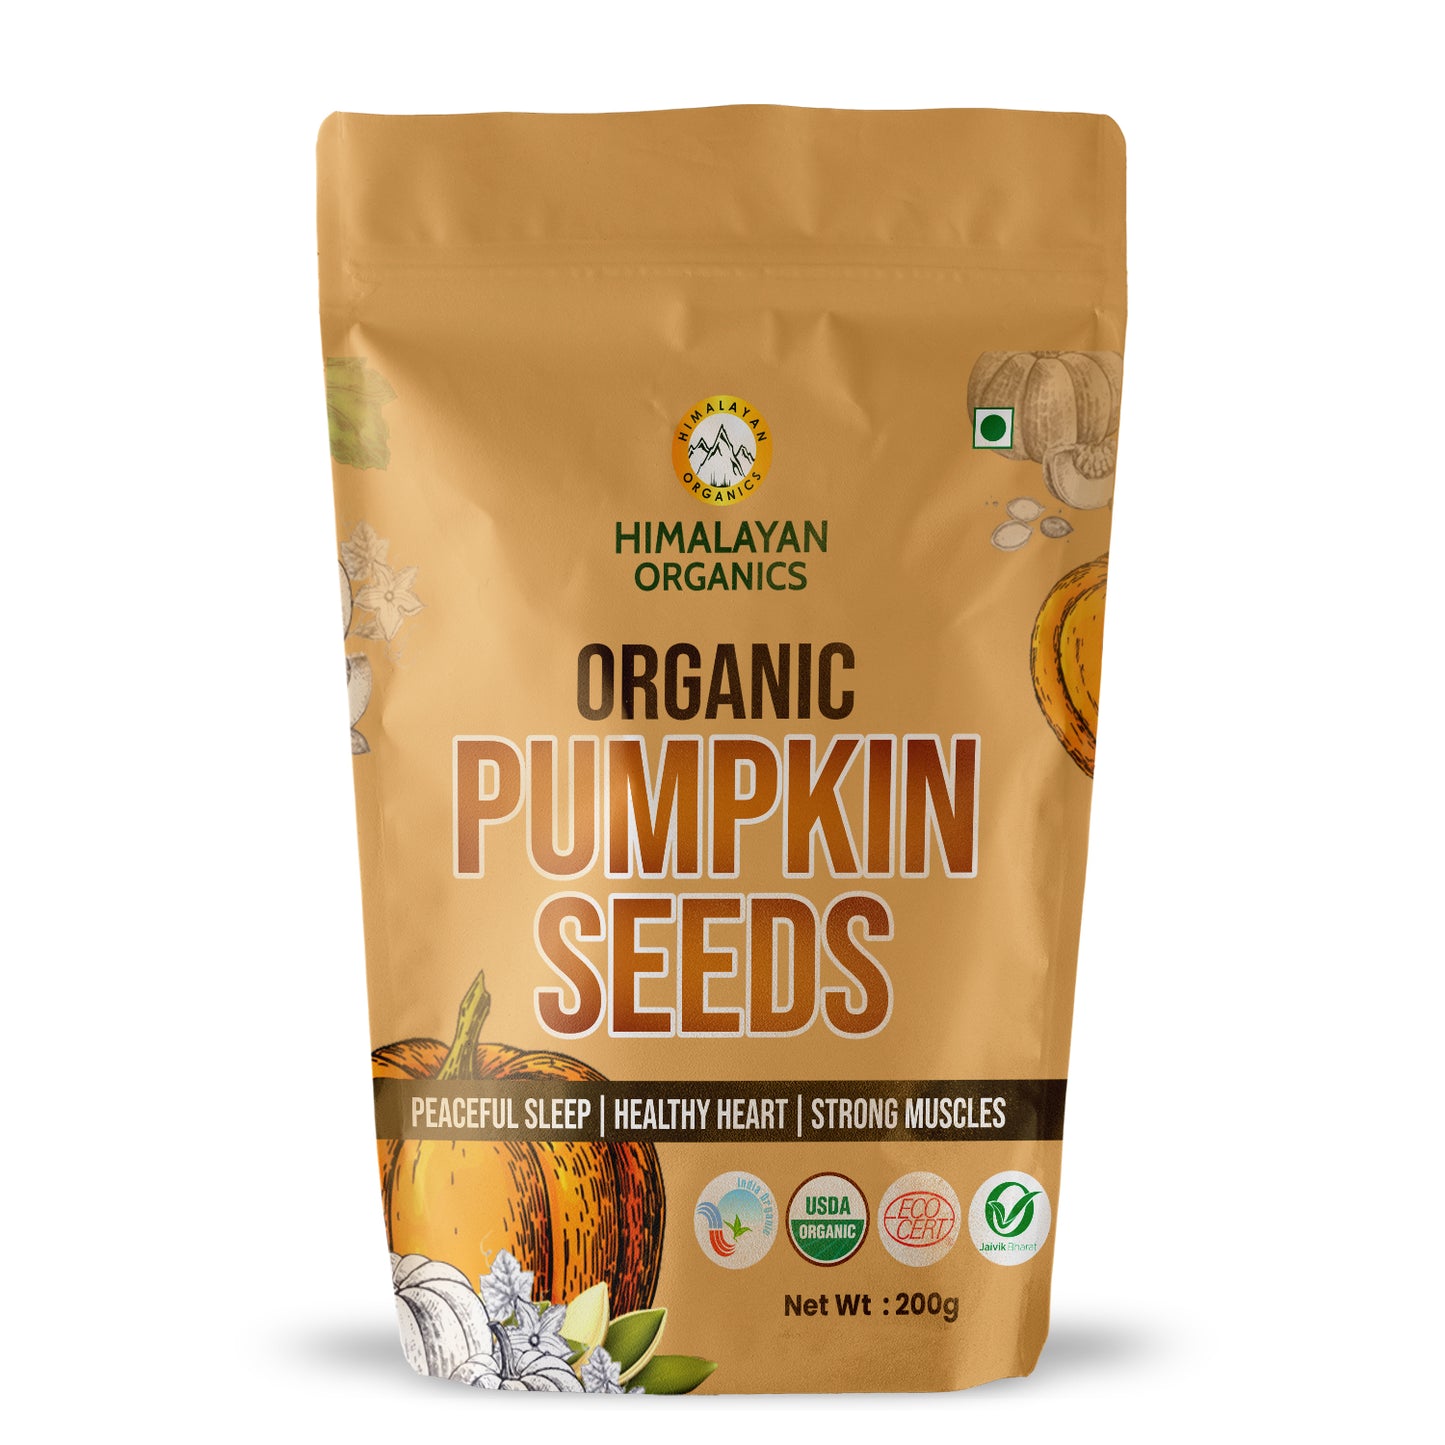 Himalayan Organics Certified Organic Pumpkin Seeds - Rich in Fiber & Minerals - Helps in Peaceful Sleep & Healthy Muscles- 200g